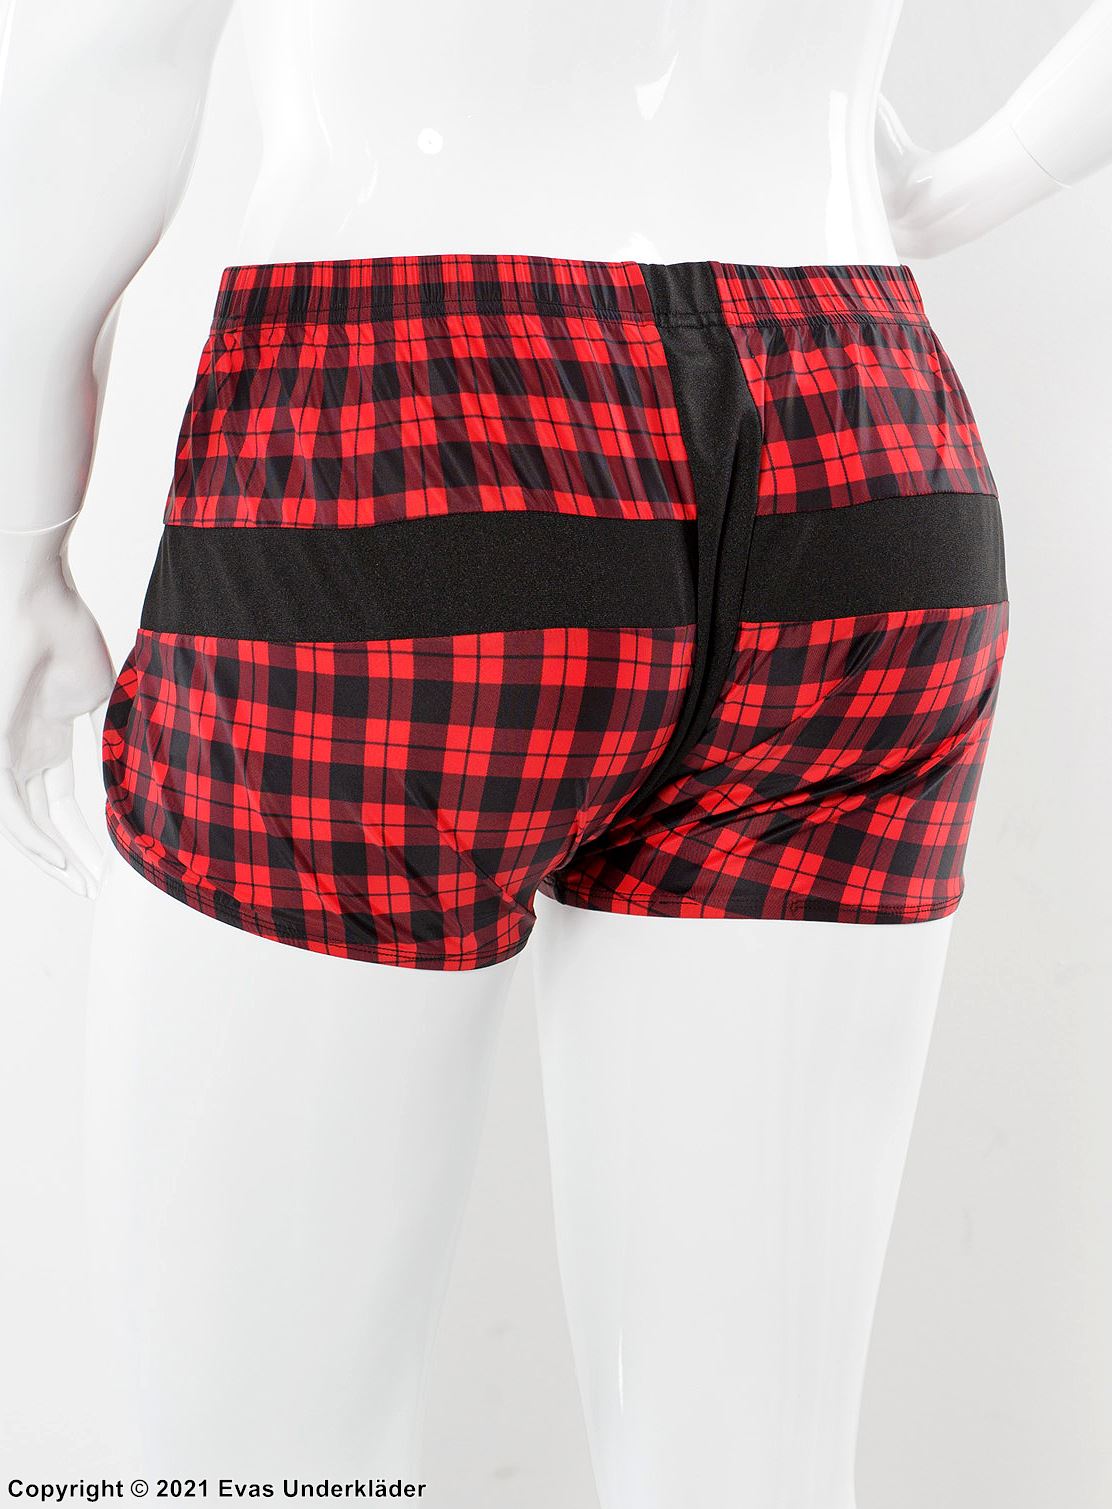 Boxer shorts, big bow, scott-checkered pattern, plus size